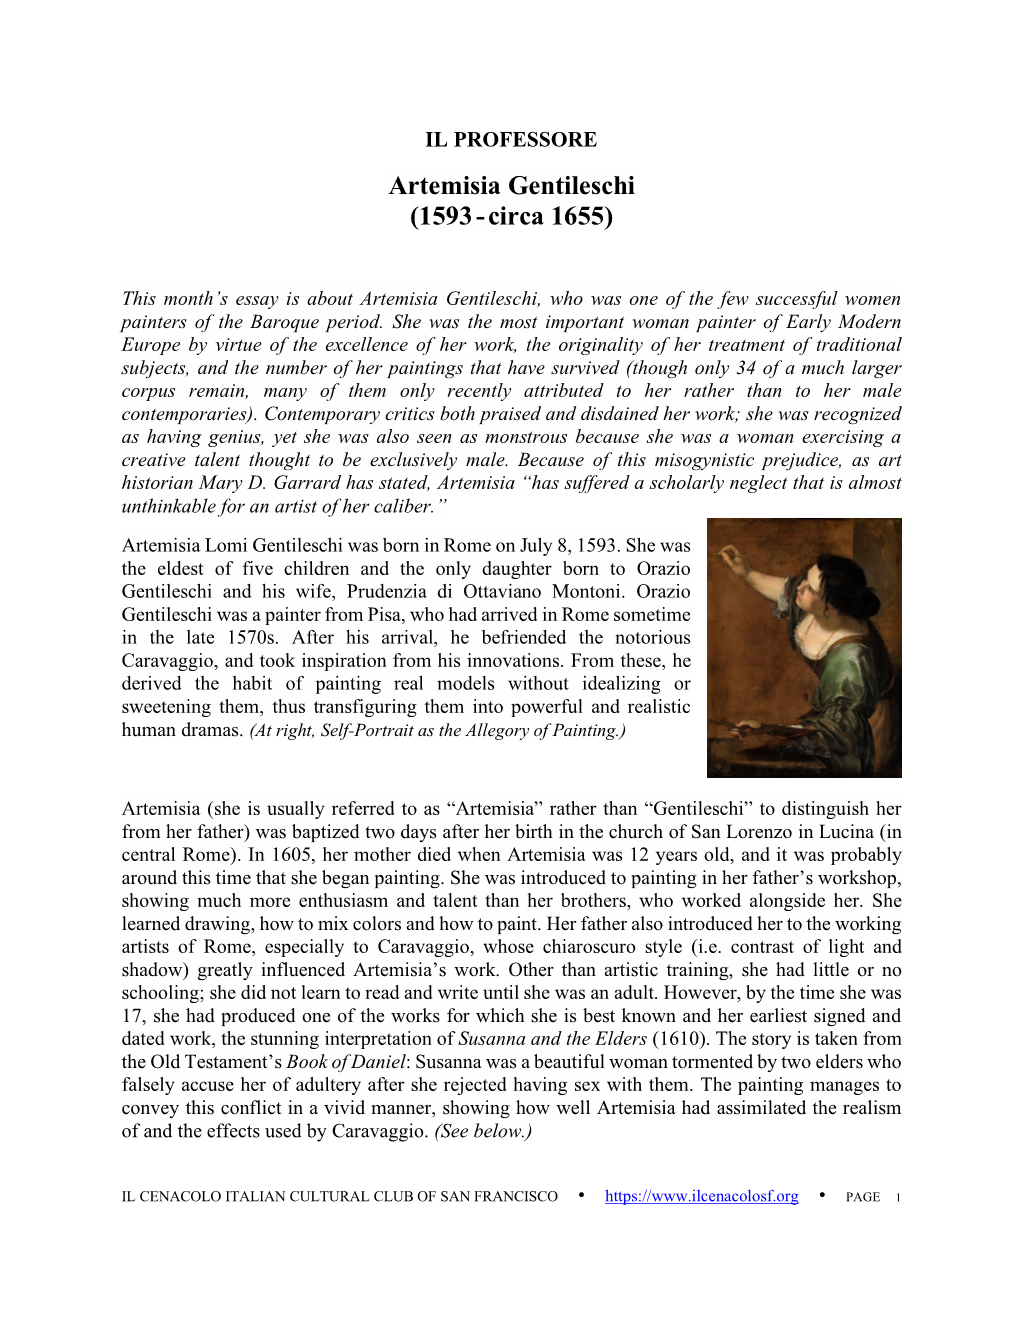 Artemisia Gentileschi (1593 - Circa 1655)